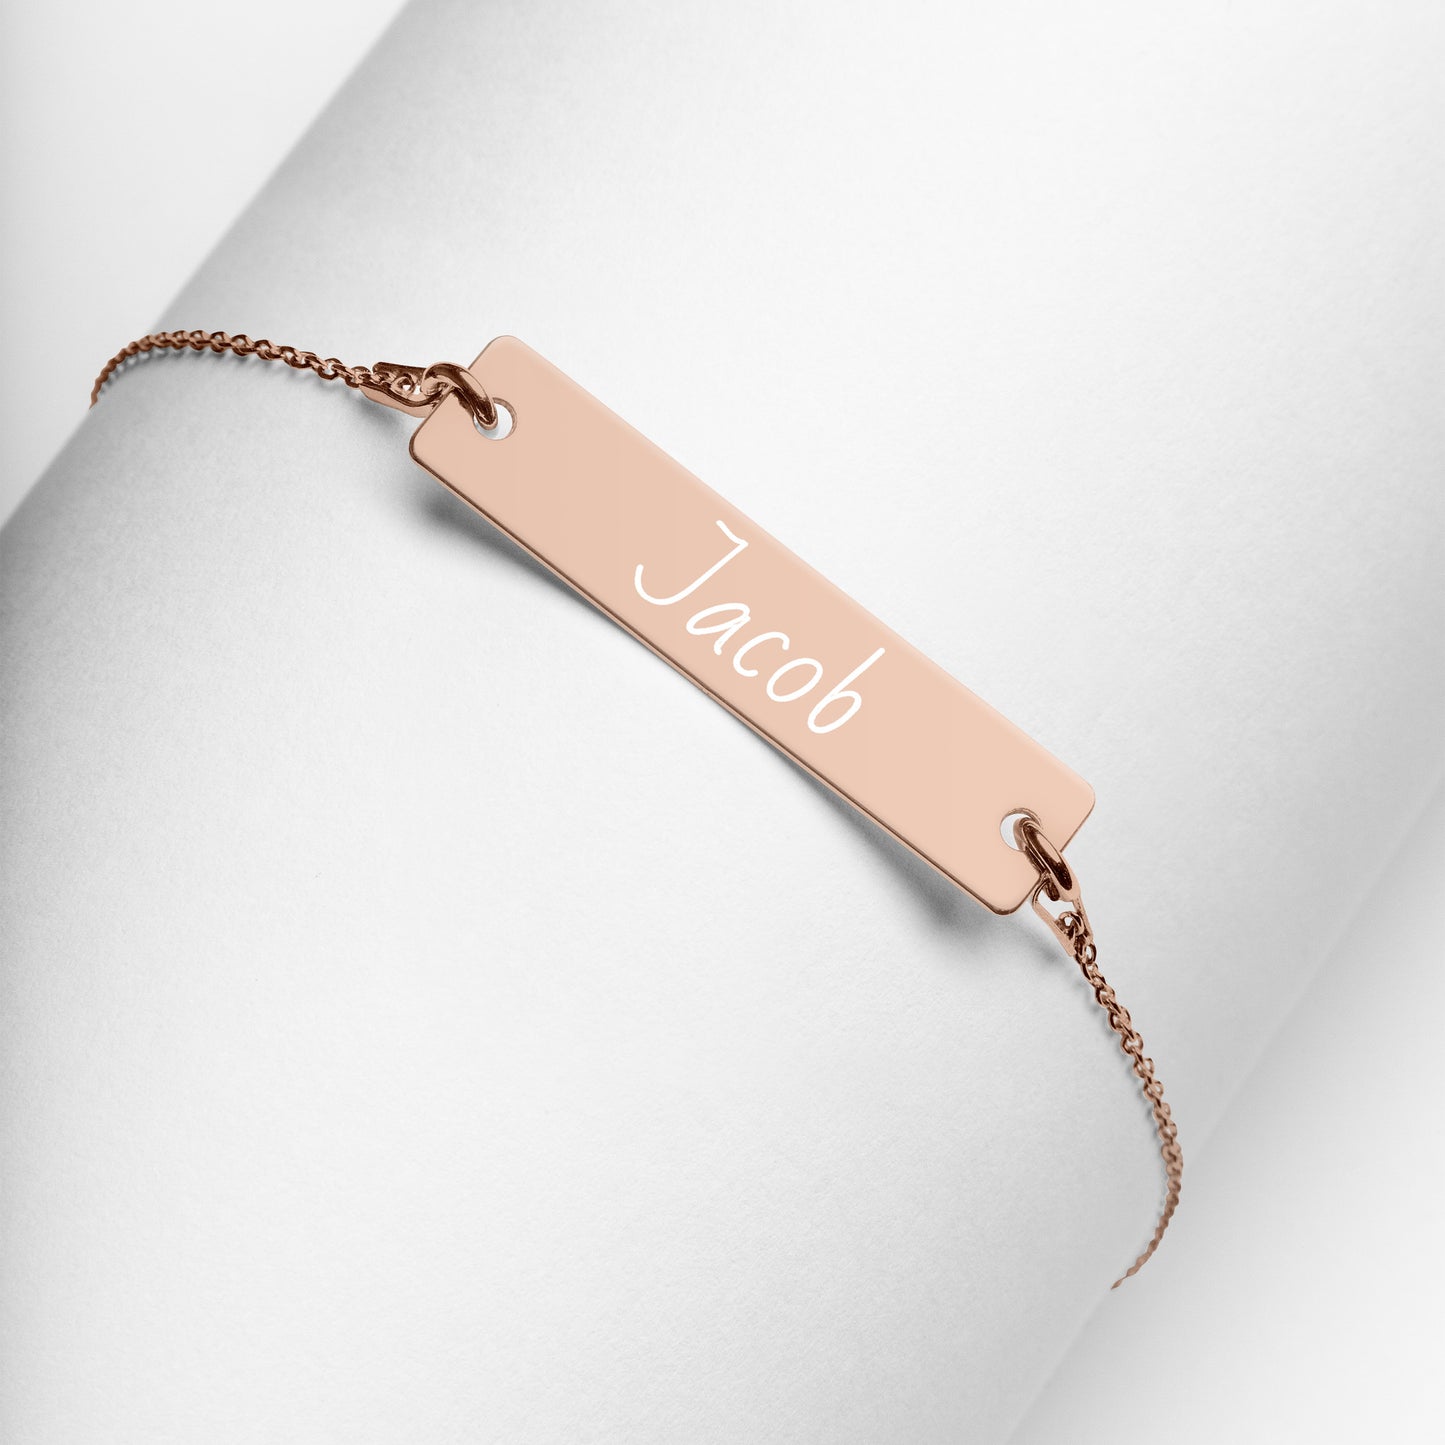 Engraved name bracelet Product image